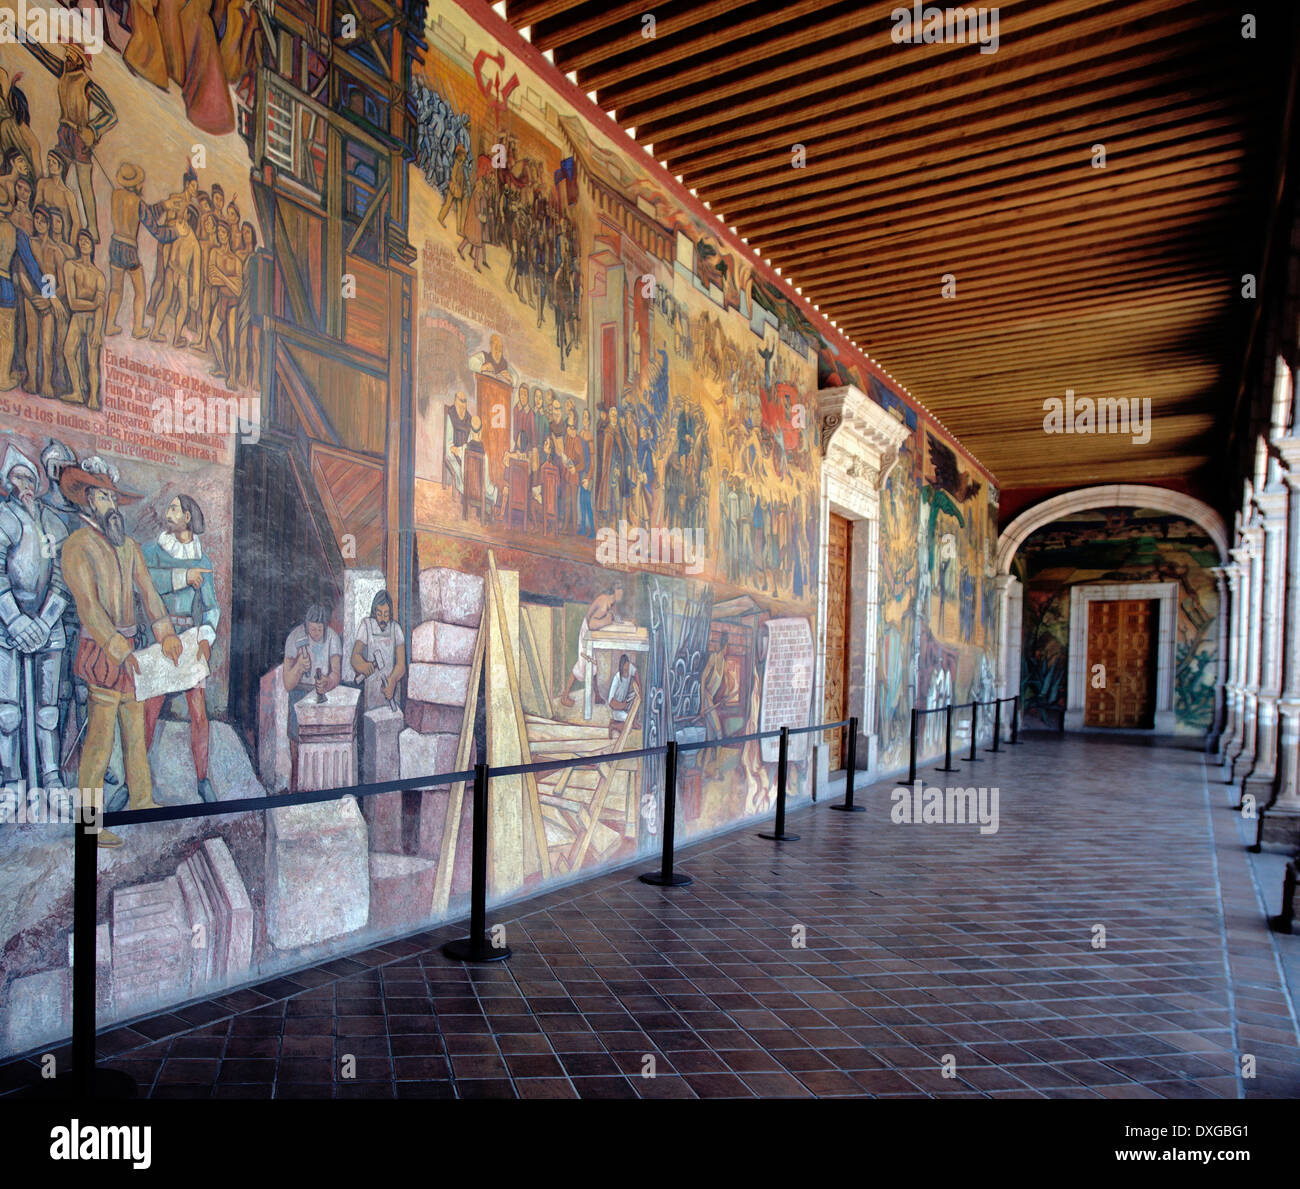 America, Mexico, Michoacan state, Morelia city, Palacio de gobierno, frescos painted by Alfredo Zalce Stock Photo